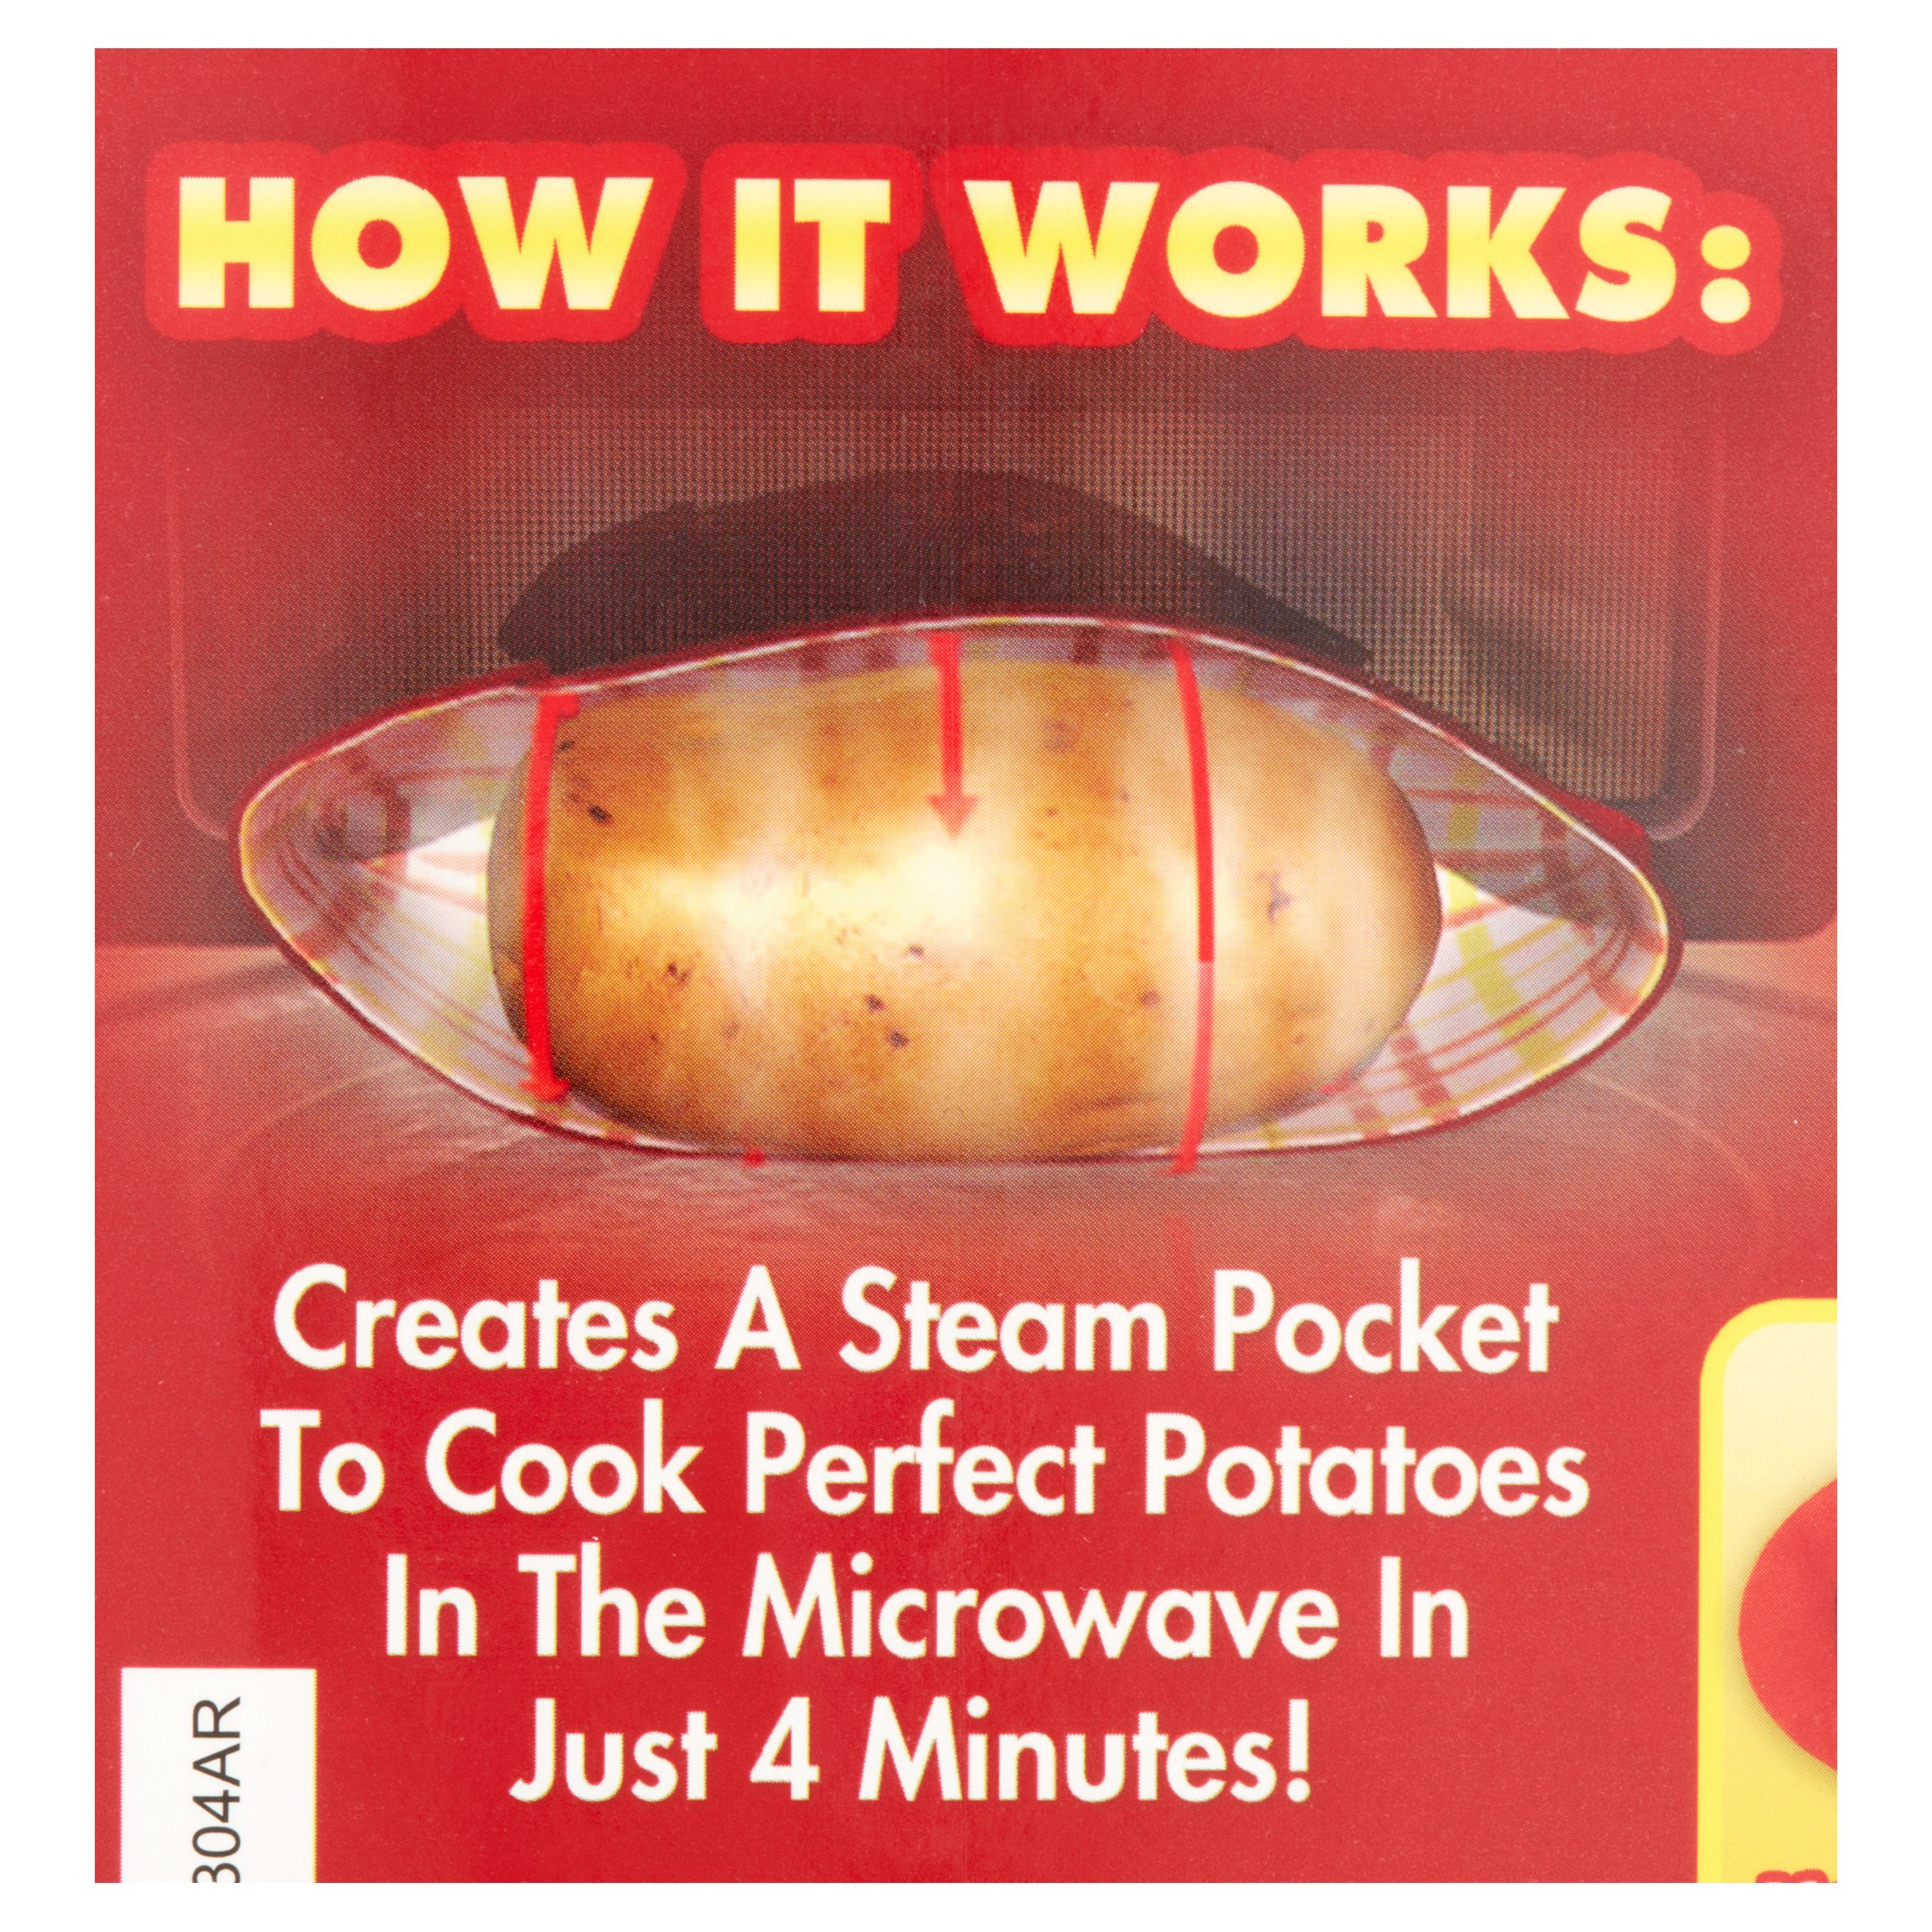 As Seen on TV Potato Express, Microwave Potato Cooker - image 4 of 4